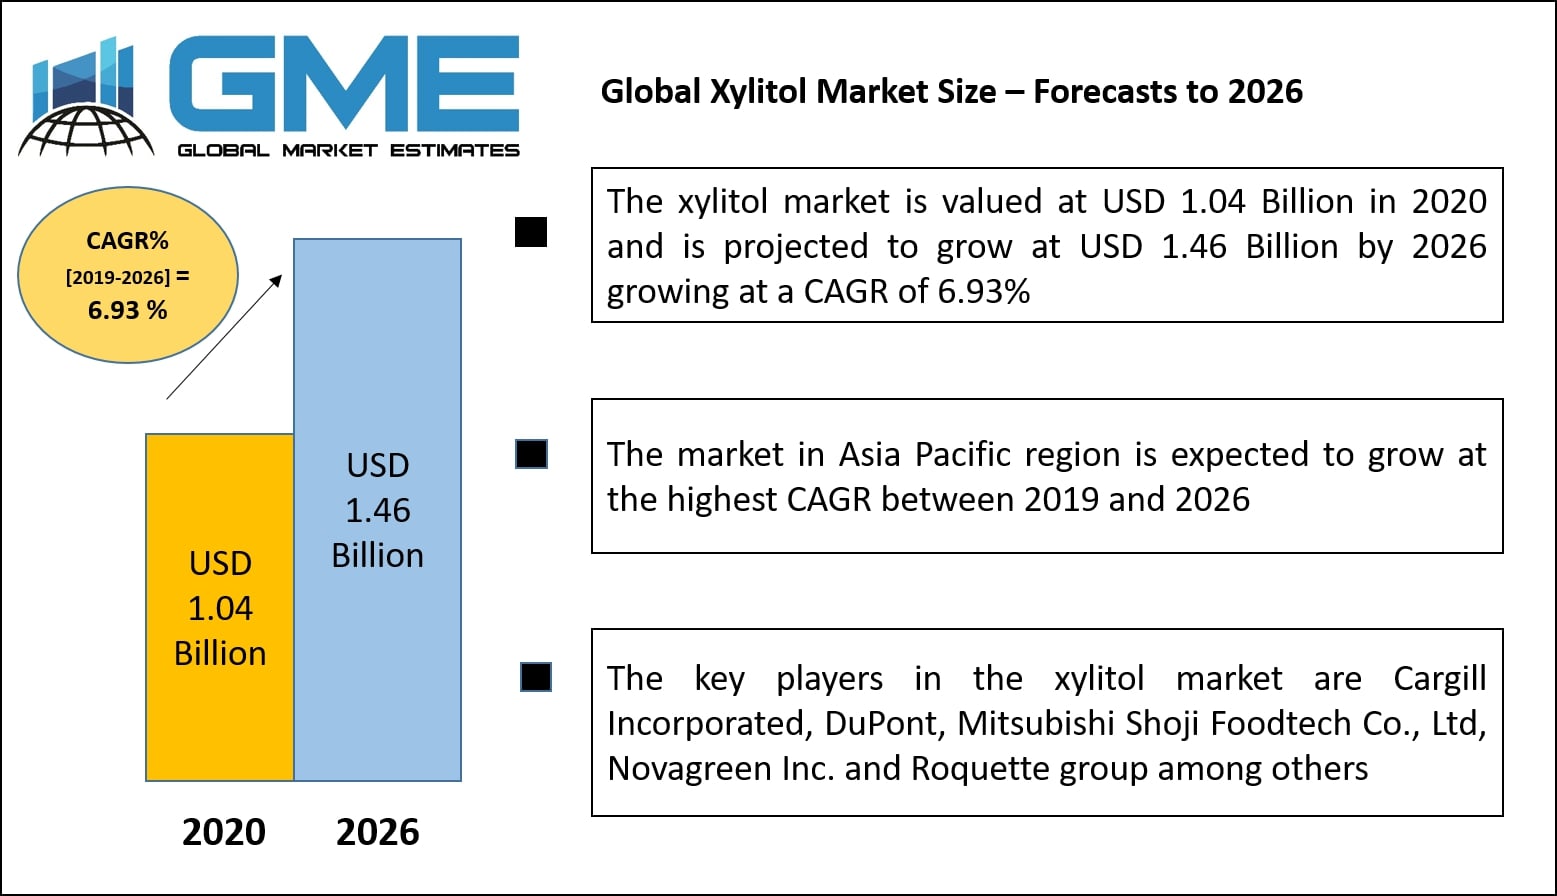 Global Xylitol Market Size – Forecasts to 2026